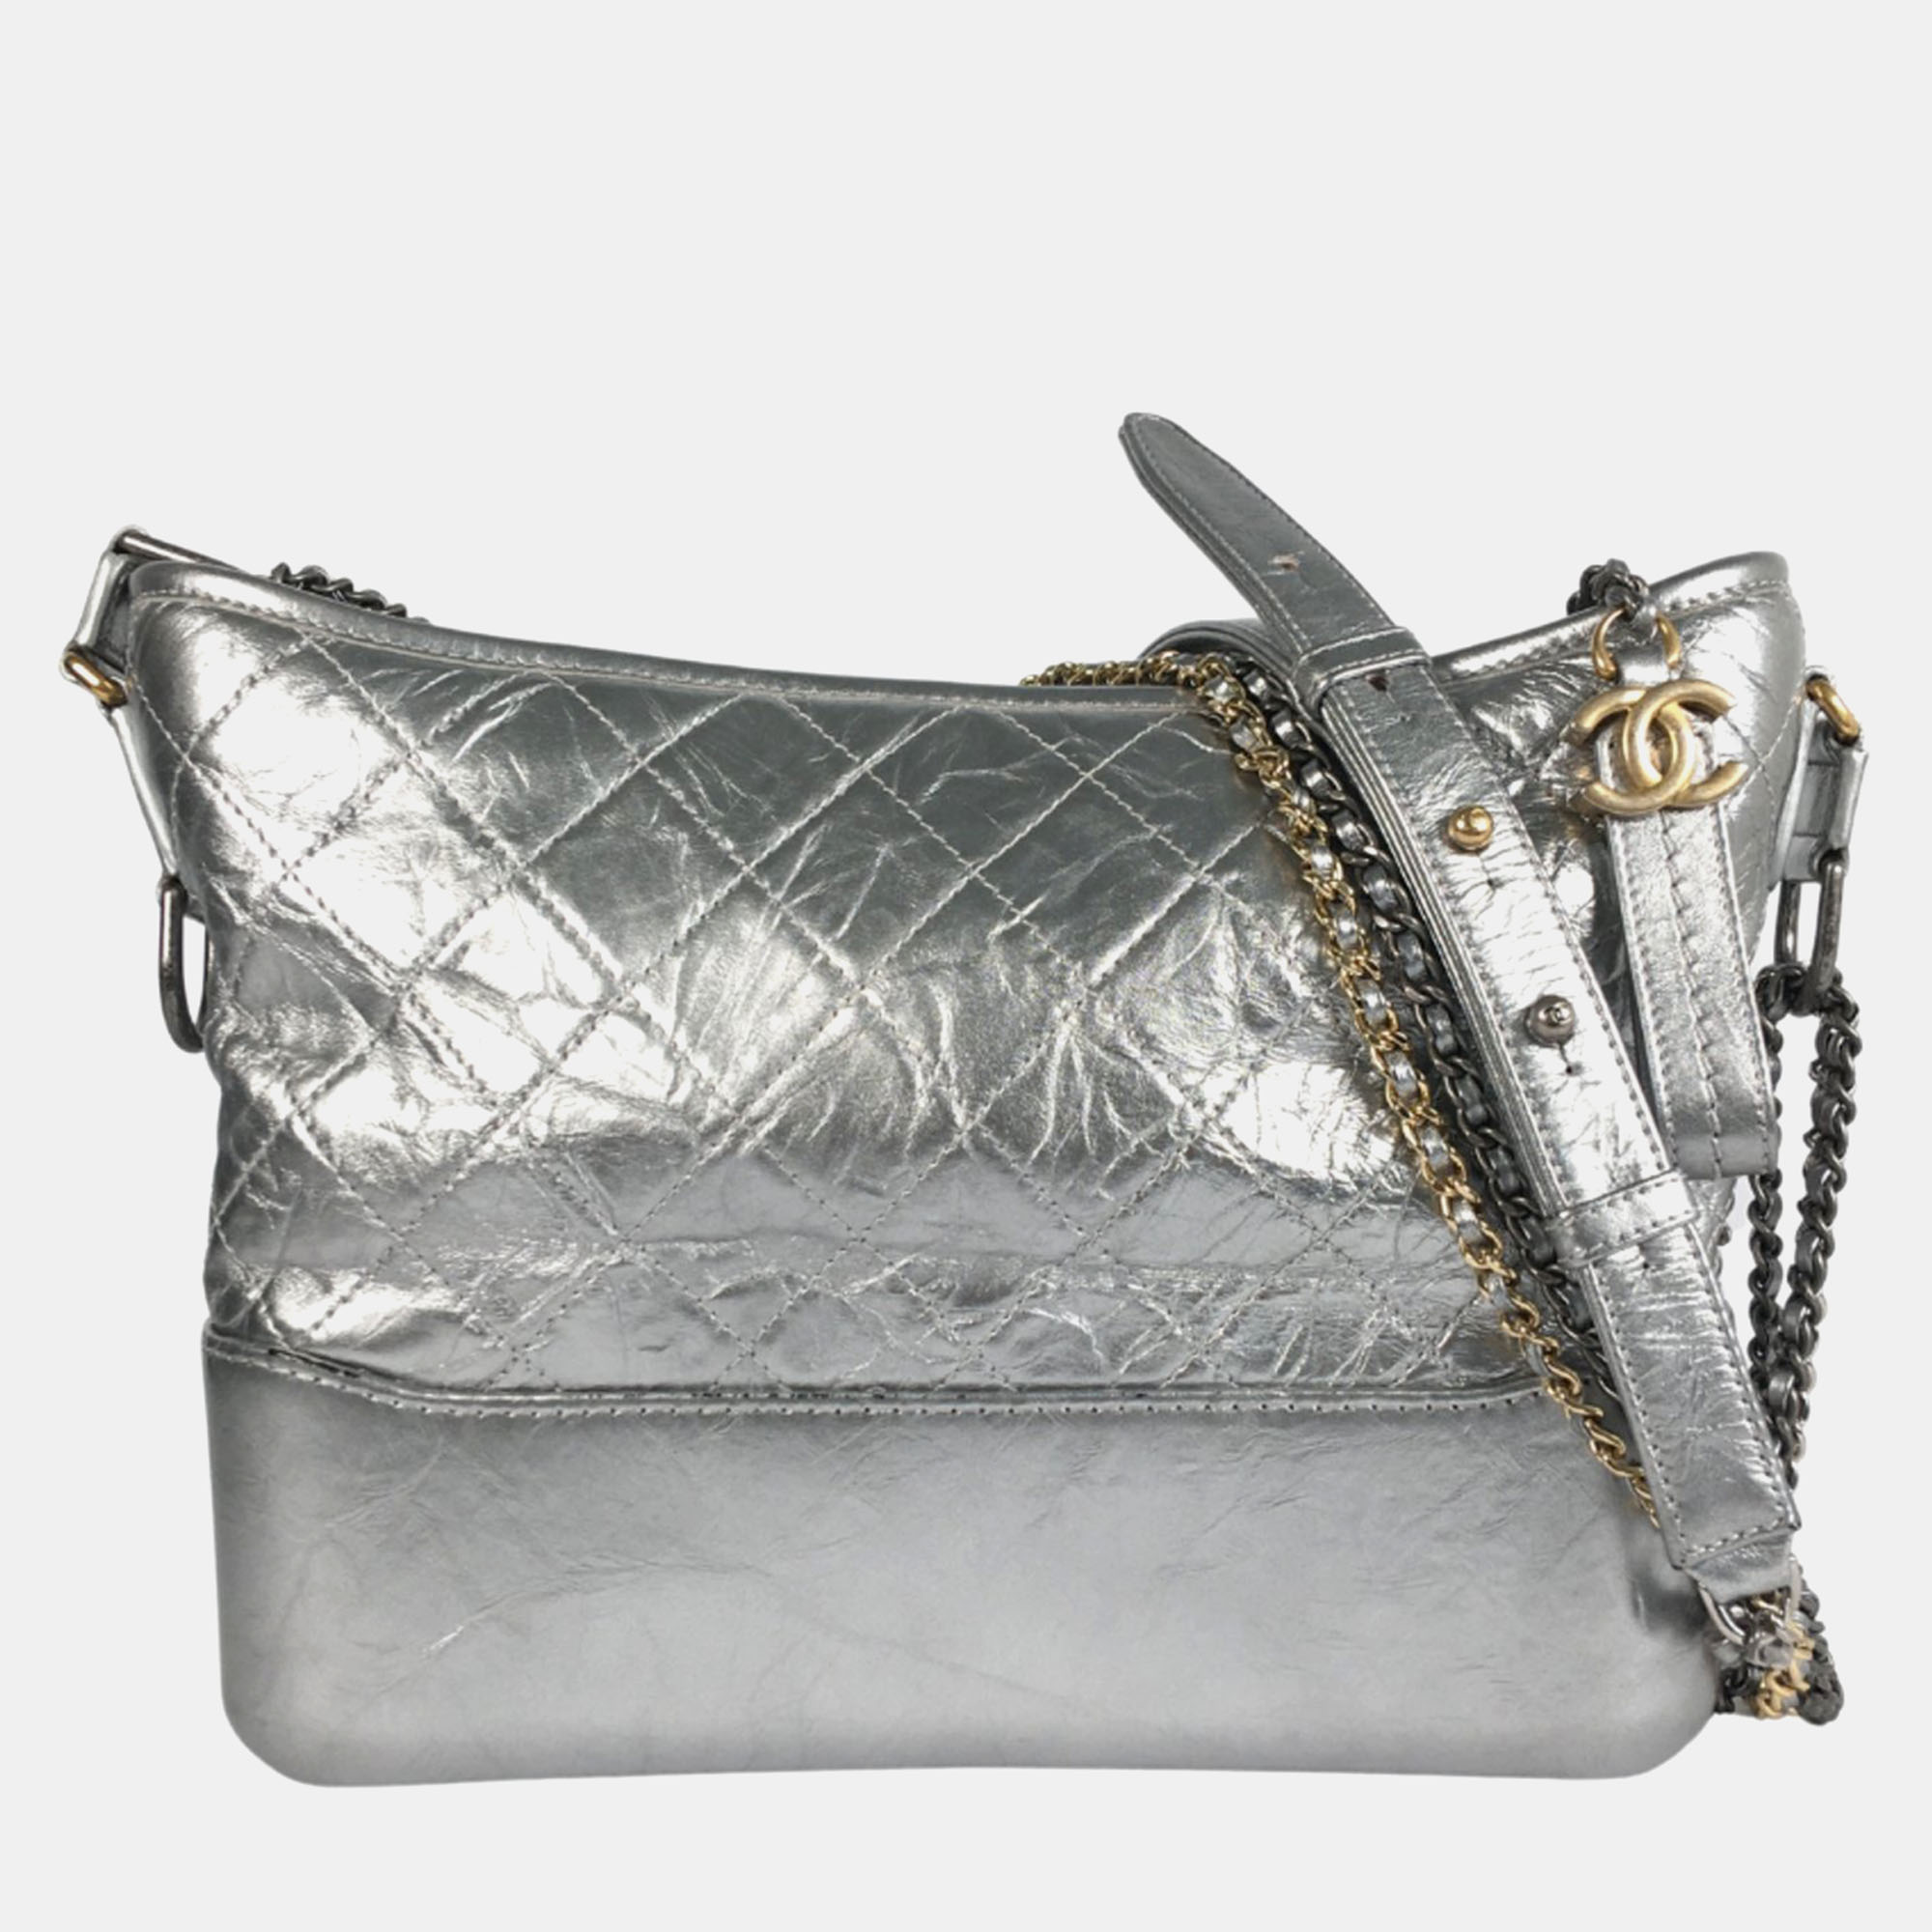 Chanel silver leather medium gabrielle shoulder bags